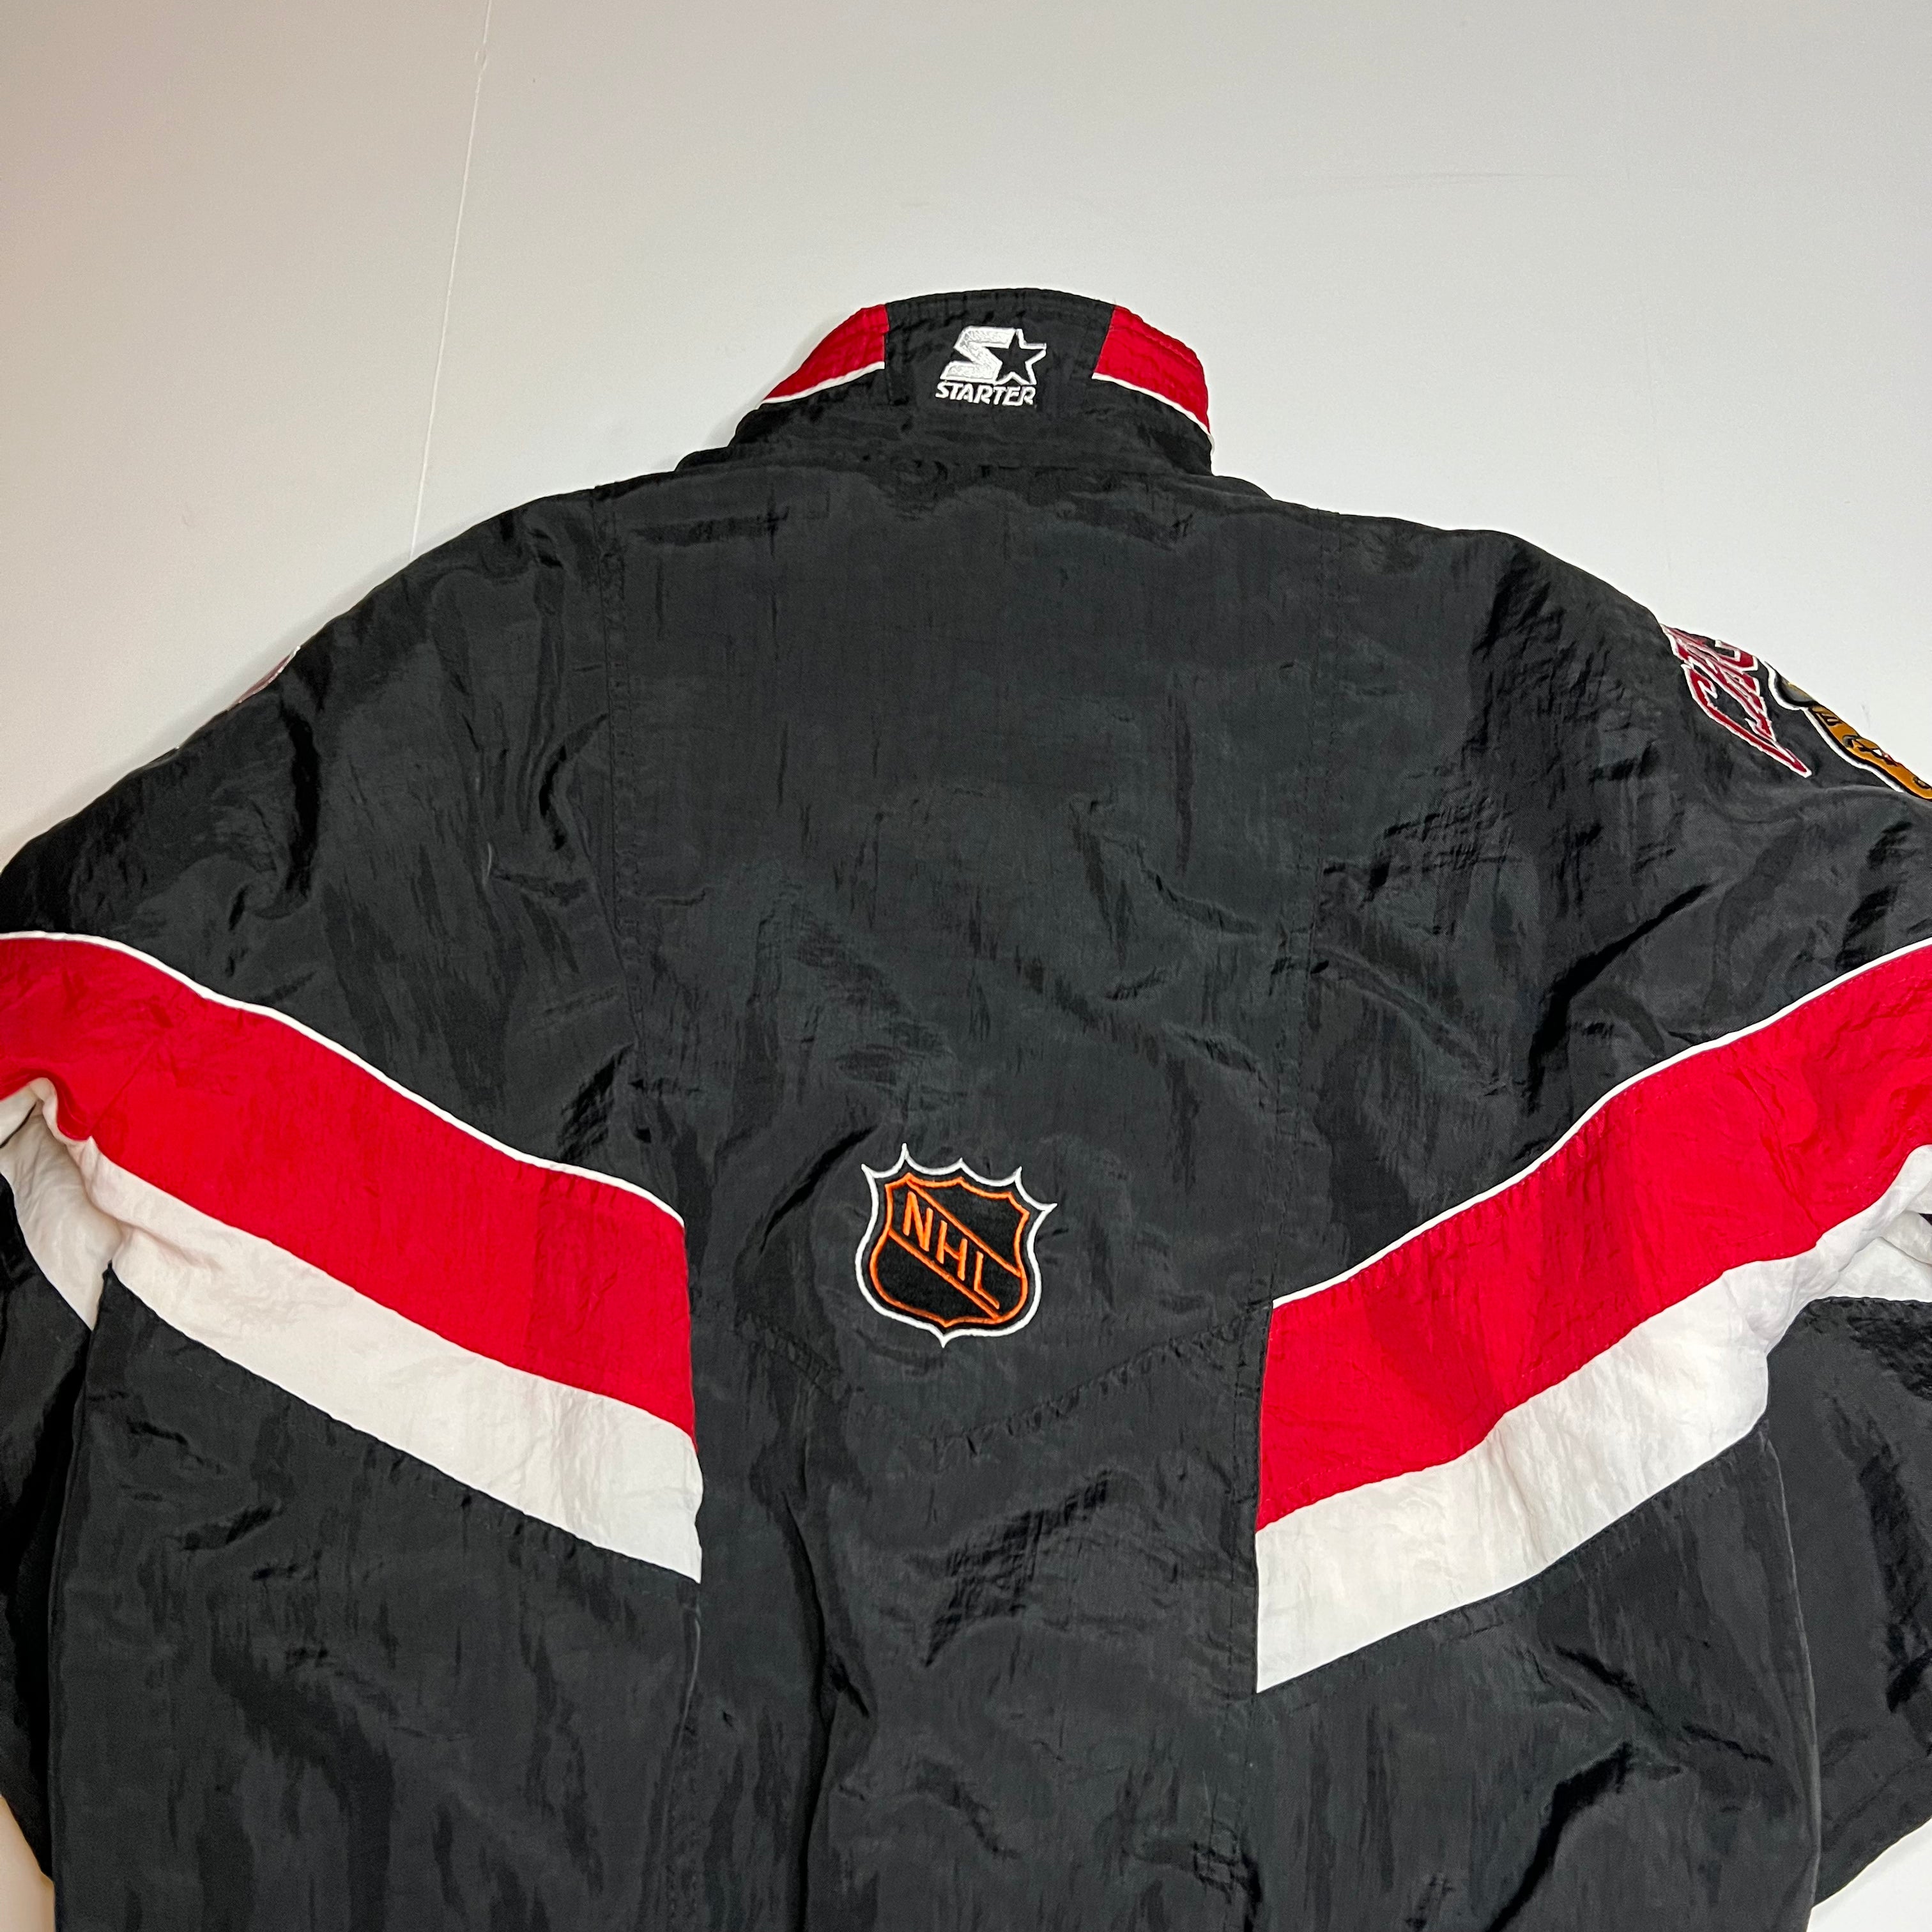 Chicago Blackhawks Starter Jacket (Size S)